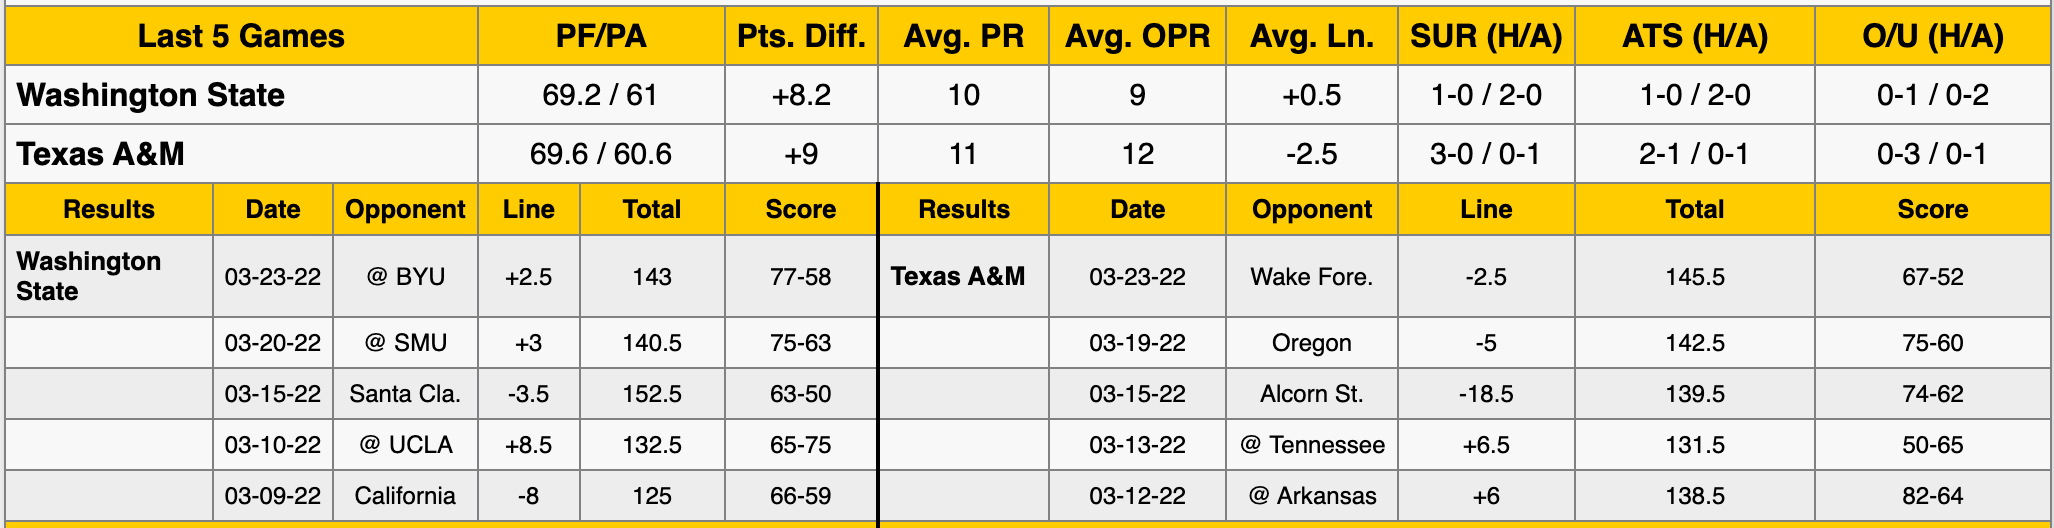 Texas A&M vs Washington State Data